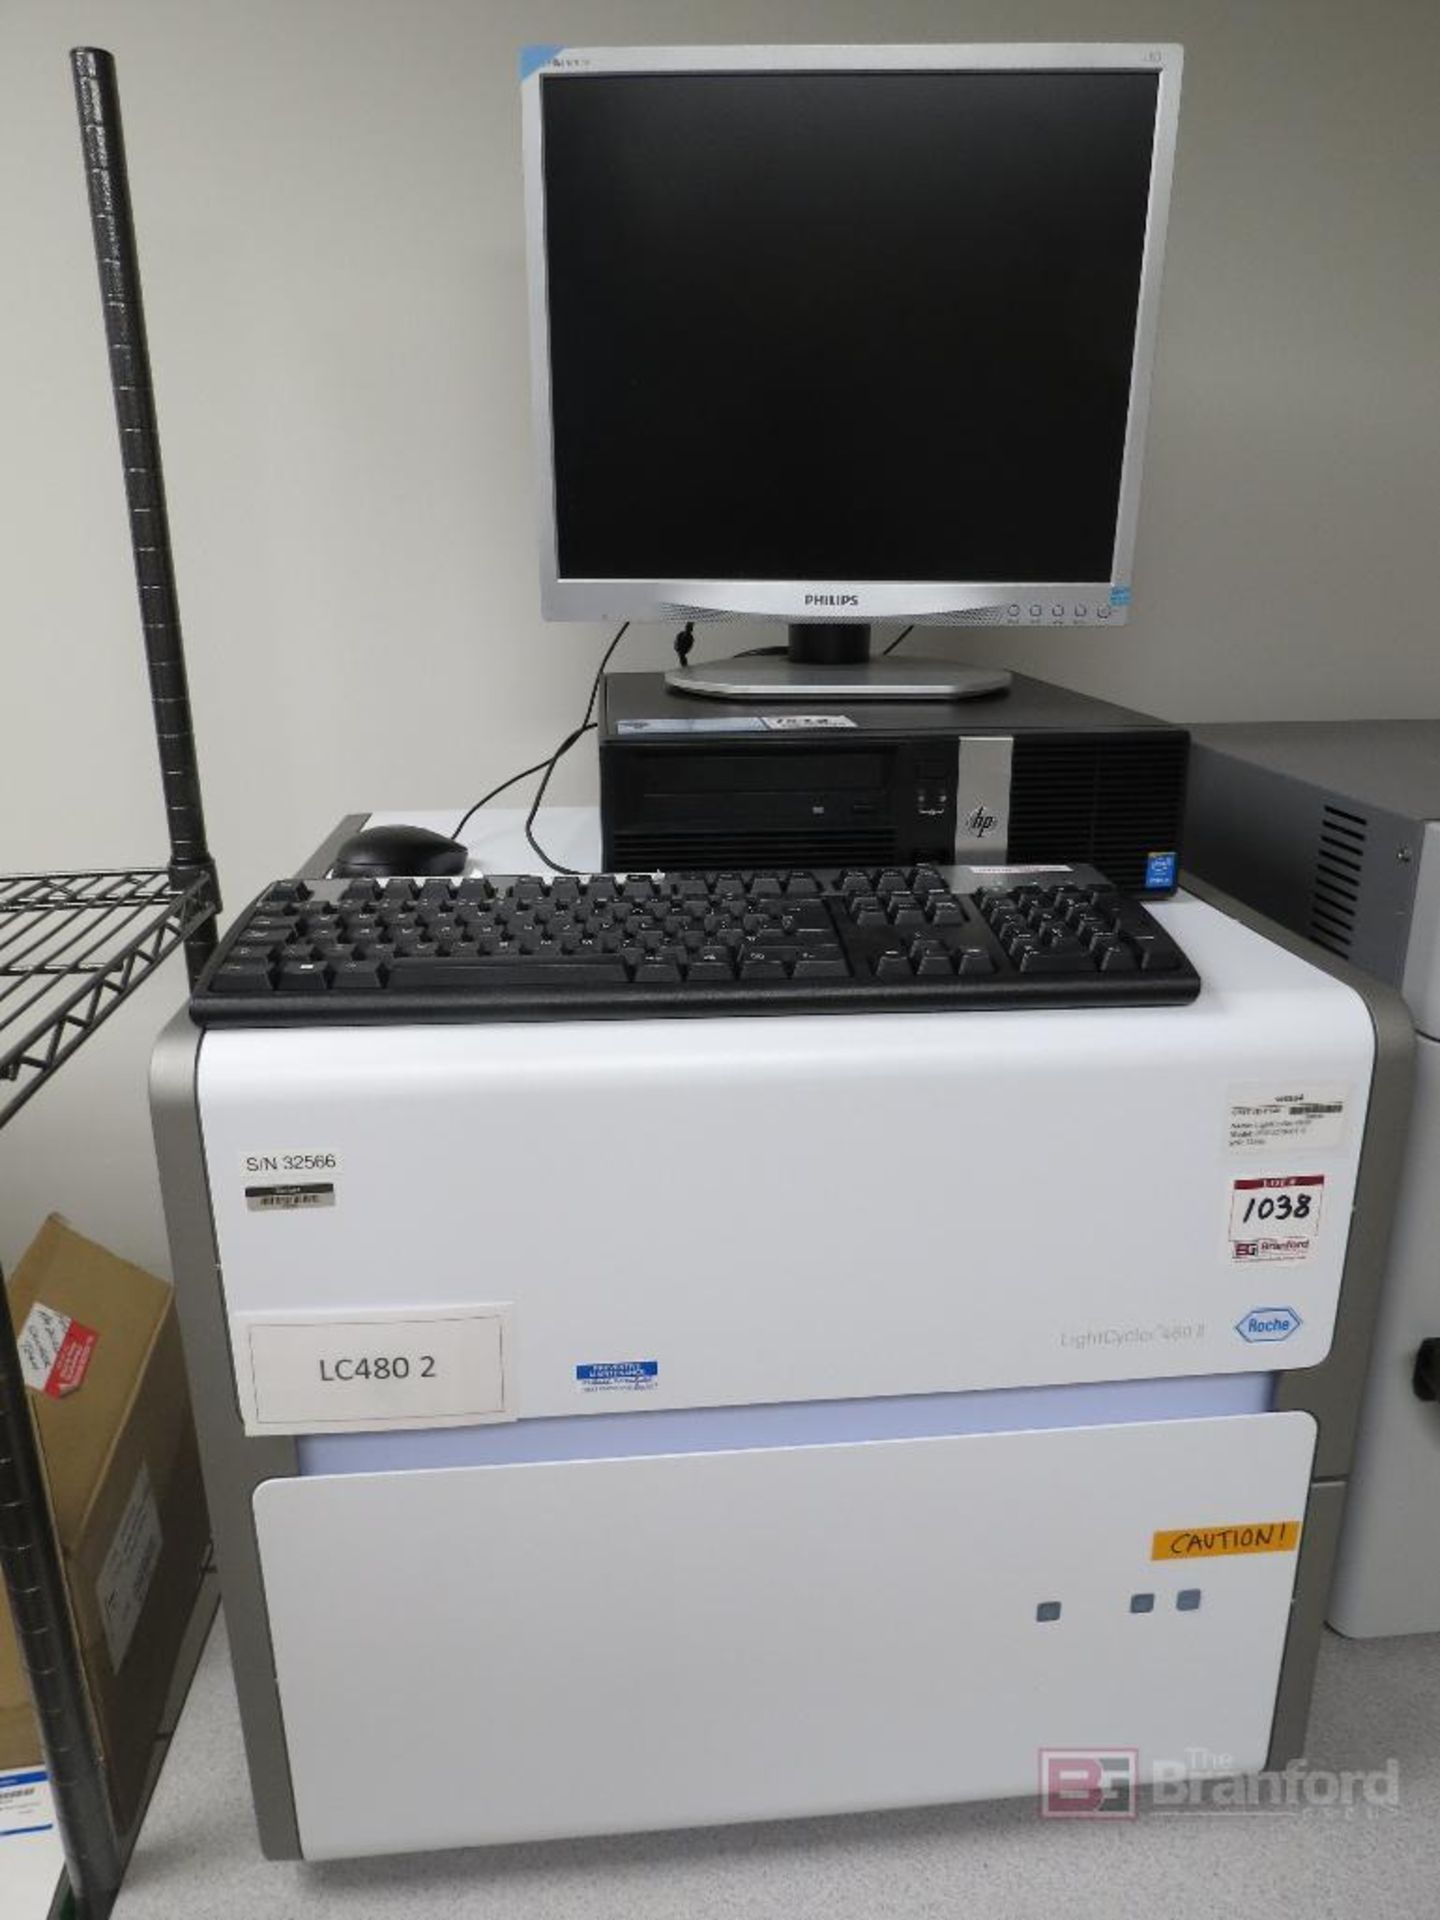 Roche LightCycler 480 II PCR System, w/ HP 5810 PC